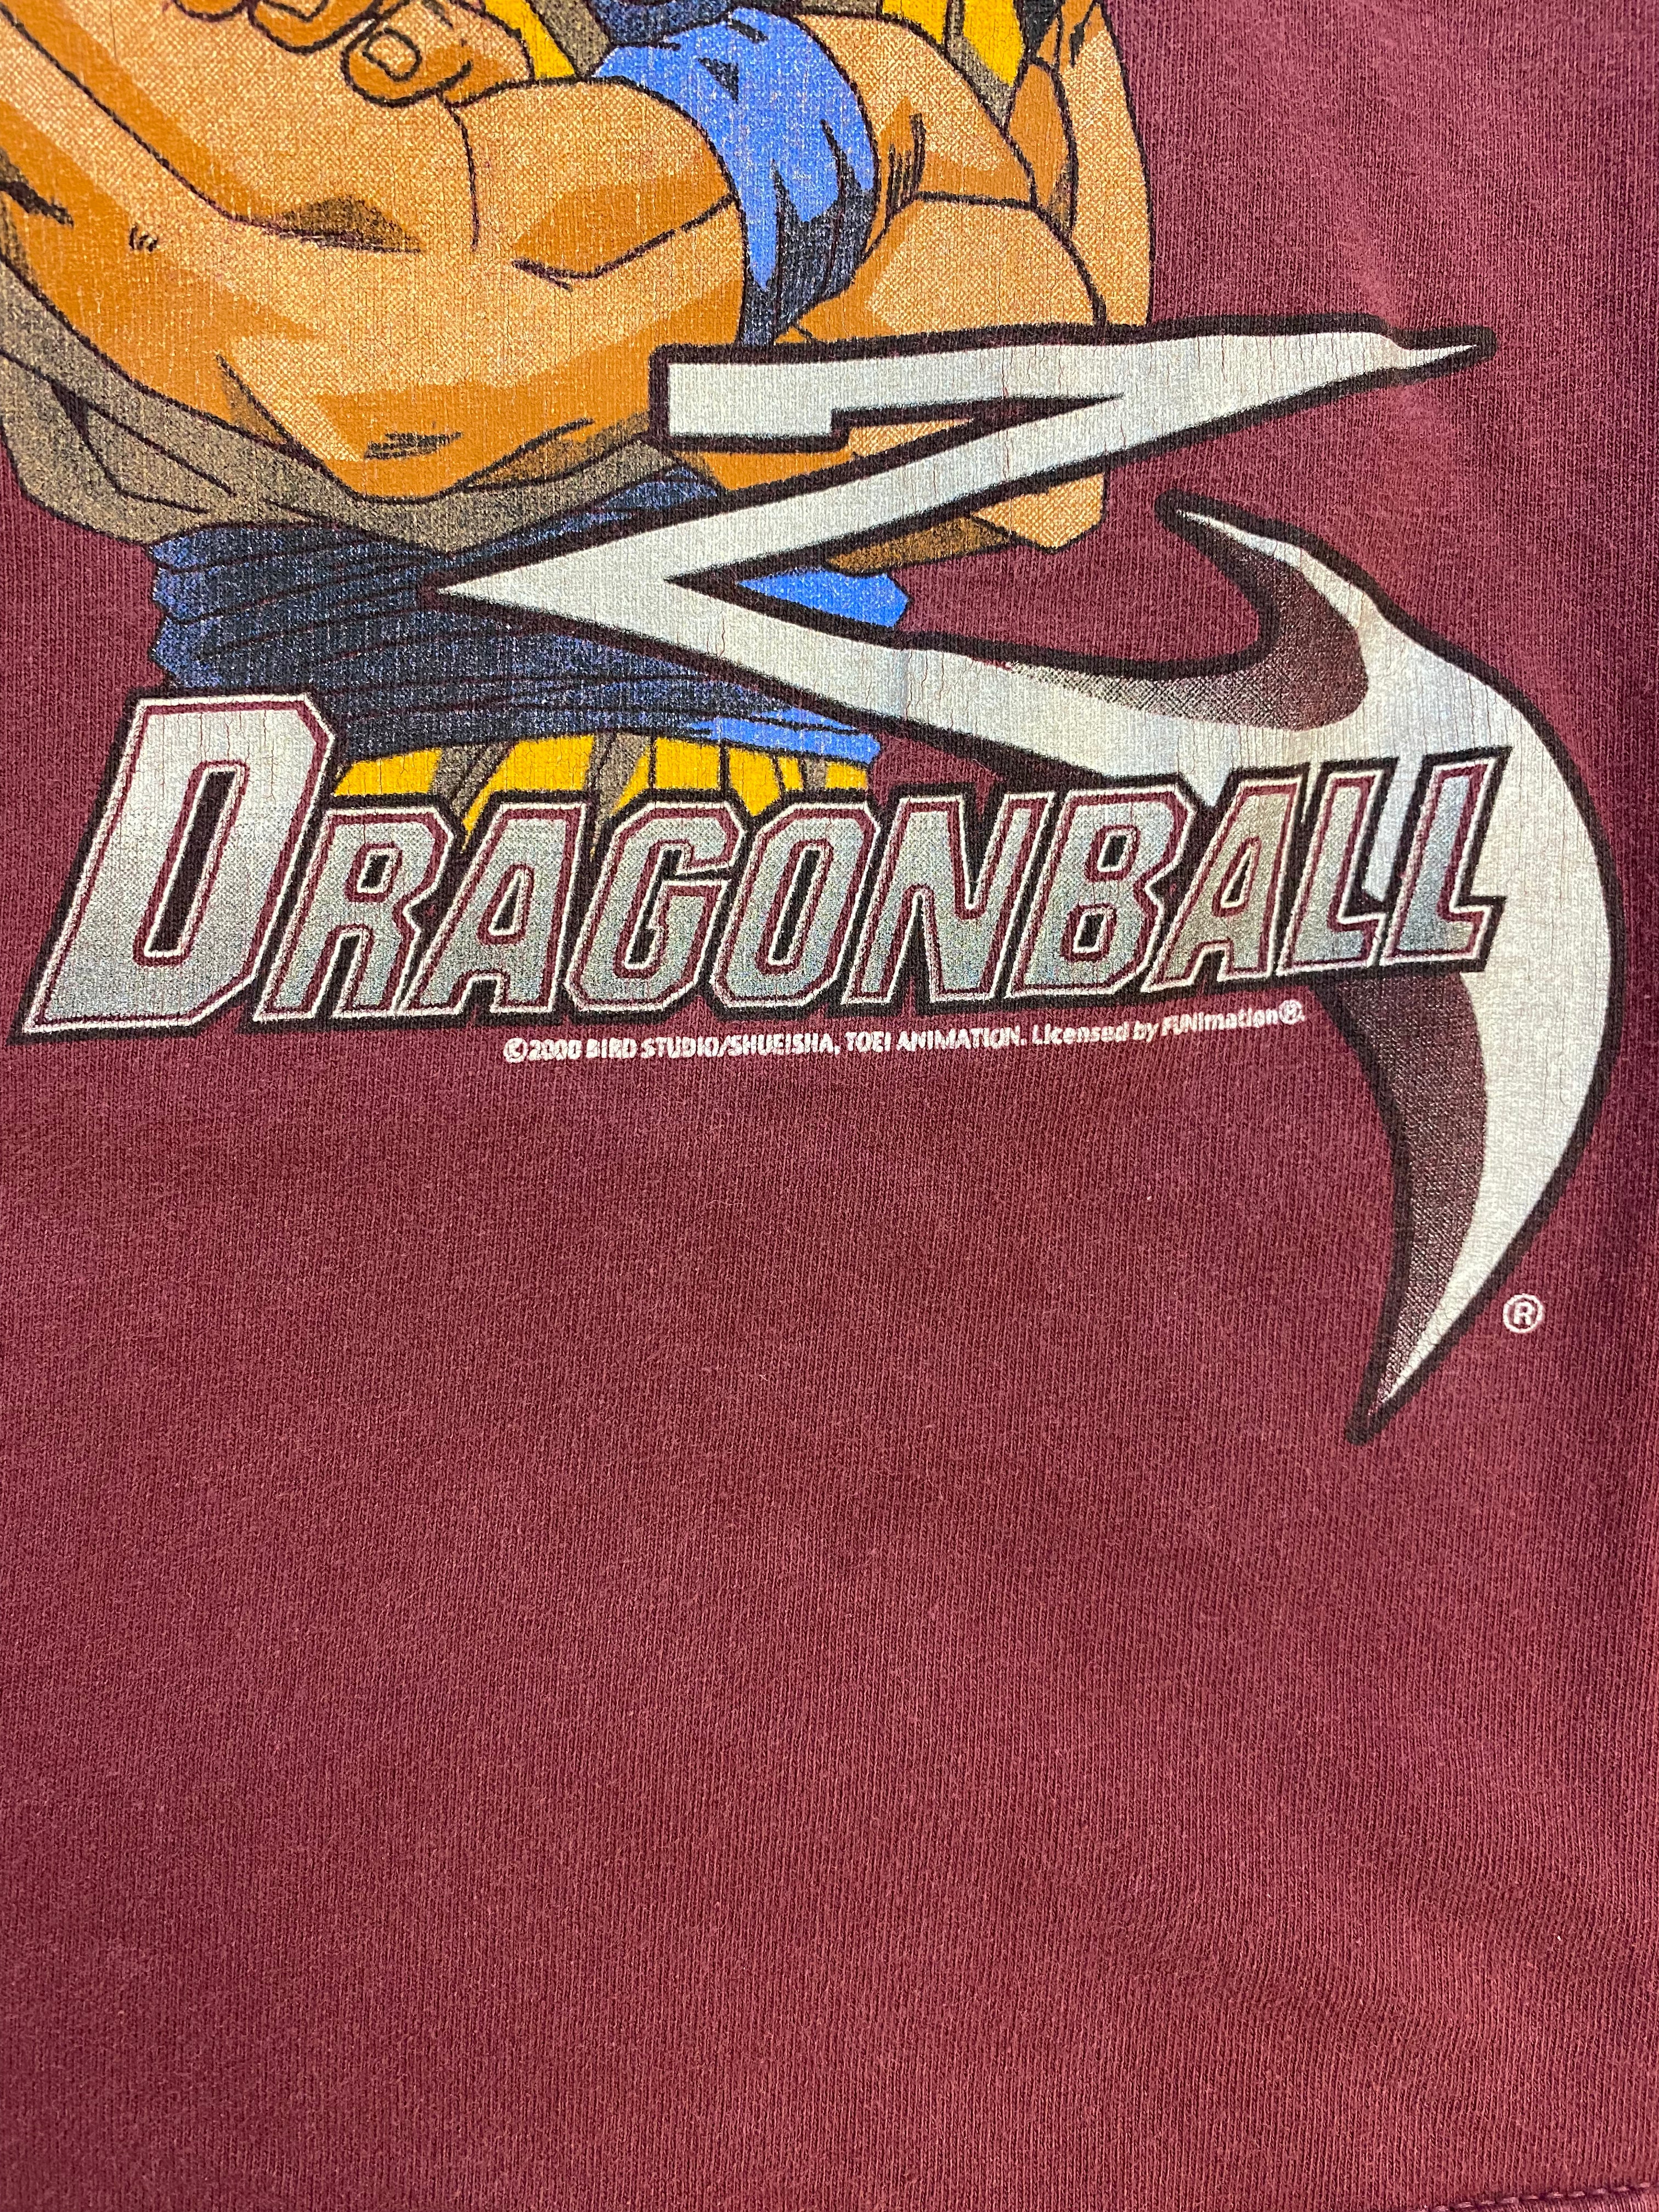 2000 Dragon Ball Z Long Sleeve Tee Red